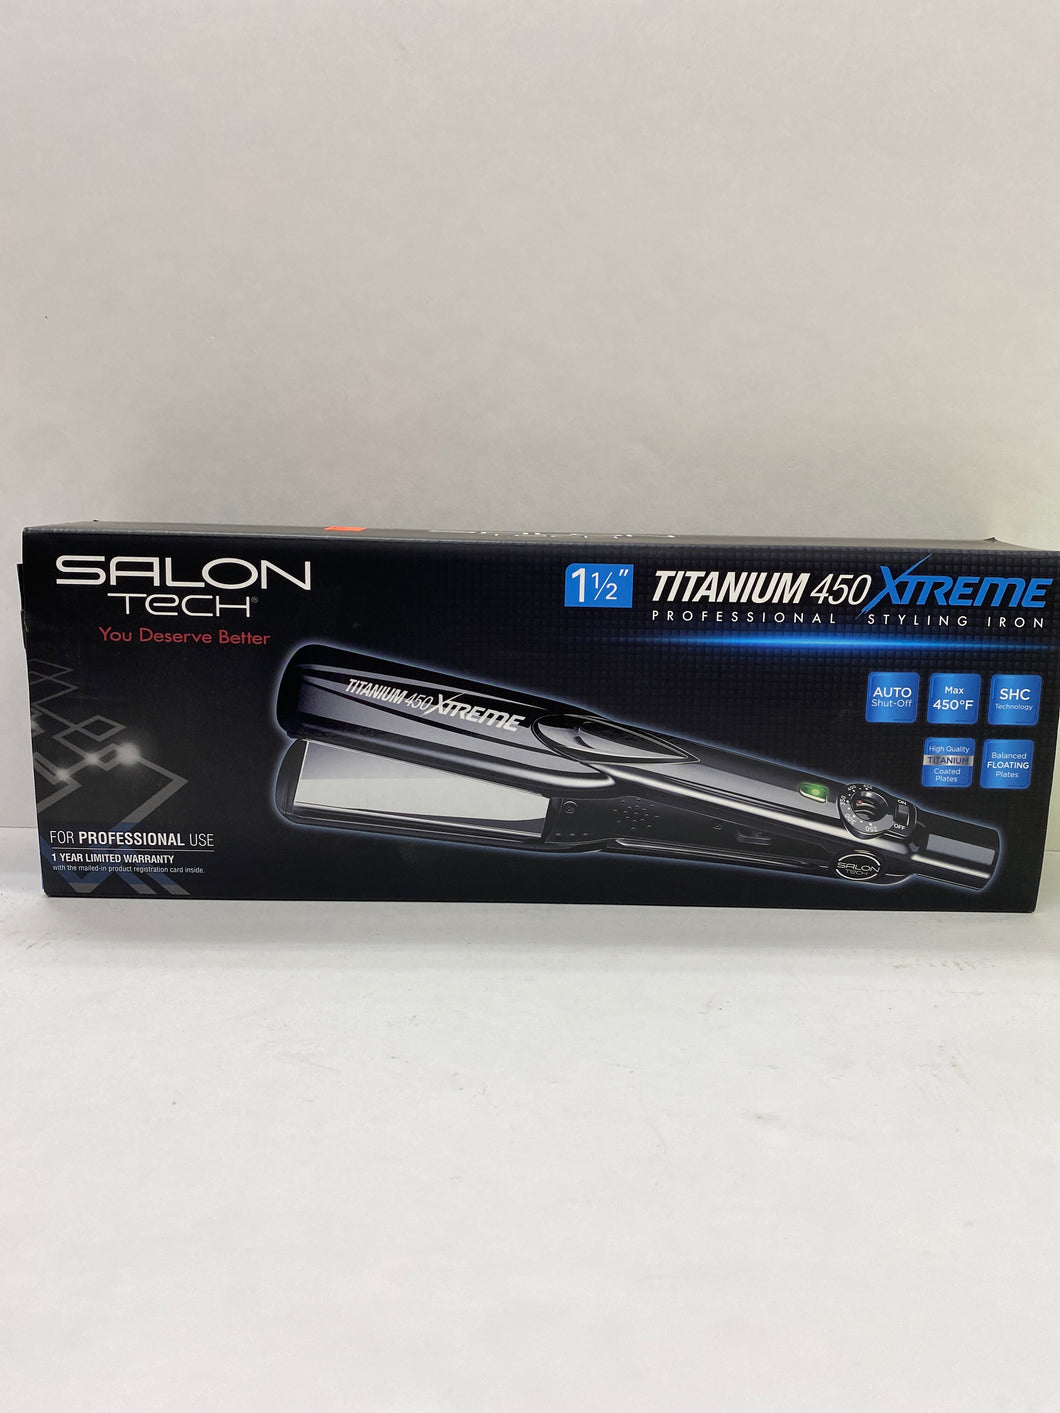 Salon Tech Titanium 450 Xtreme Styling Iron